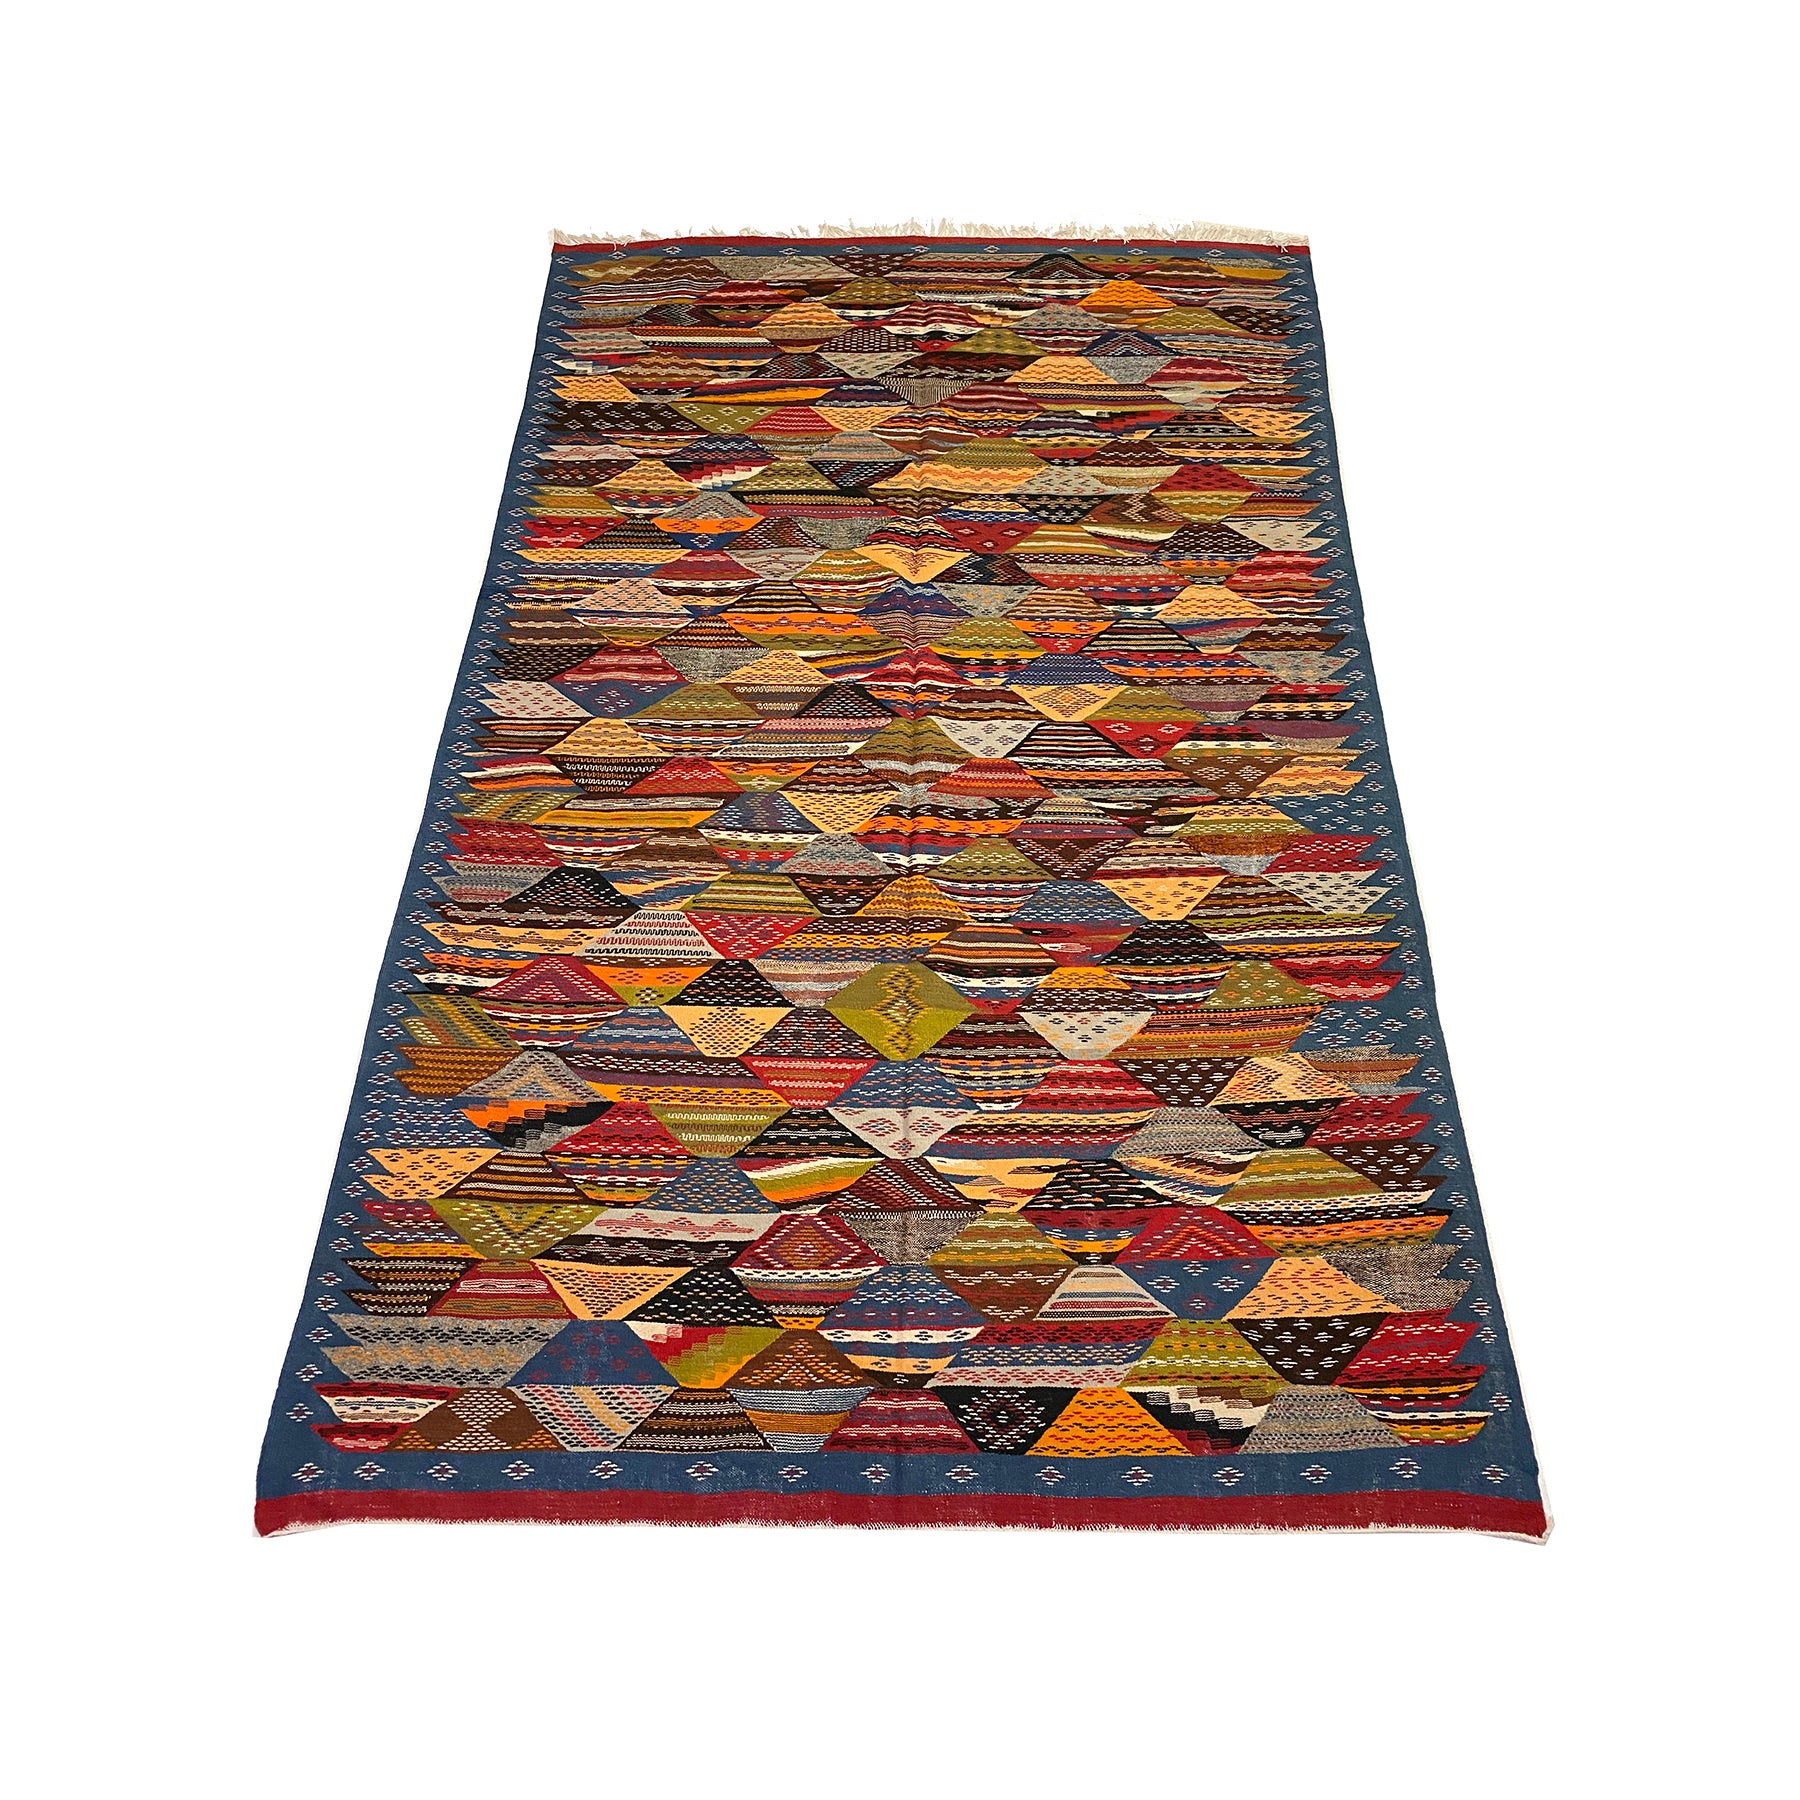 Kharita style Moroccan rug in warm colors with blue border - Kantara | Moroccan Rugs